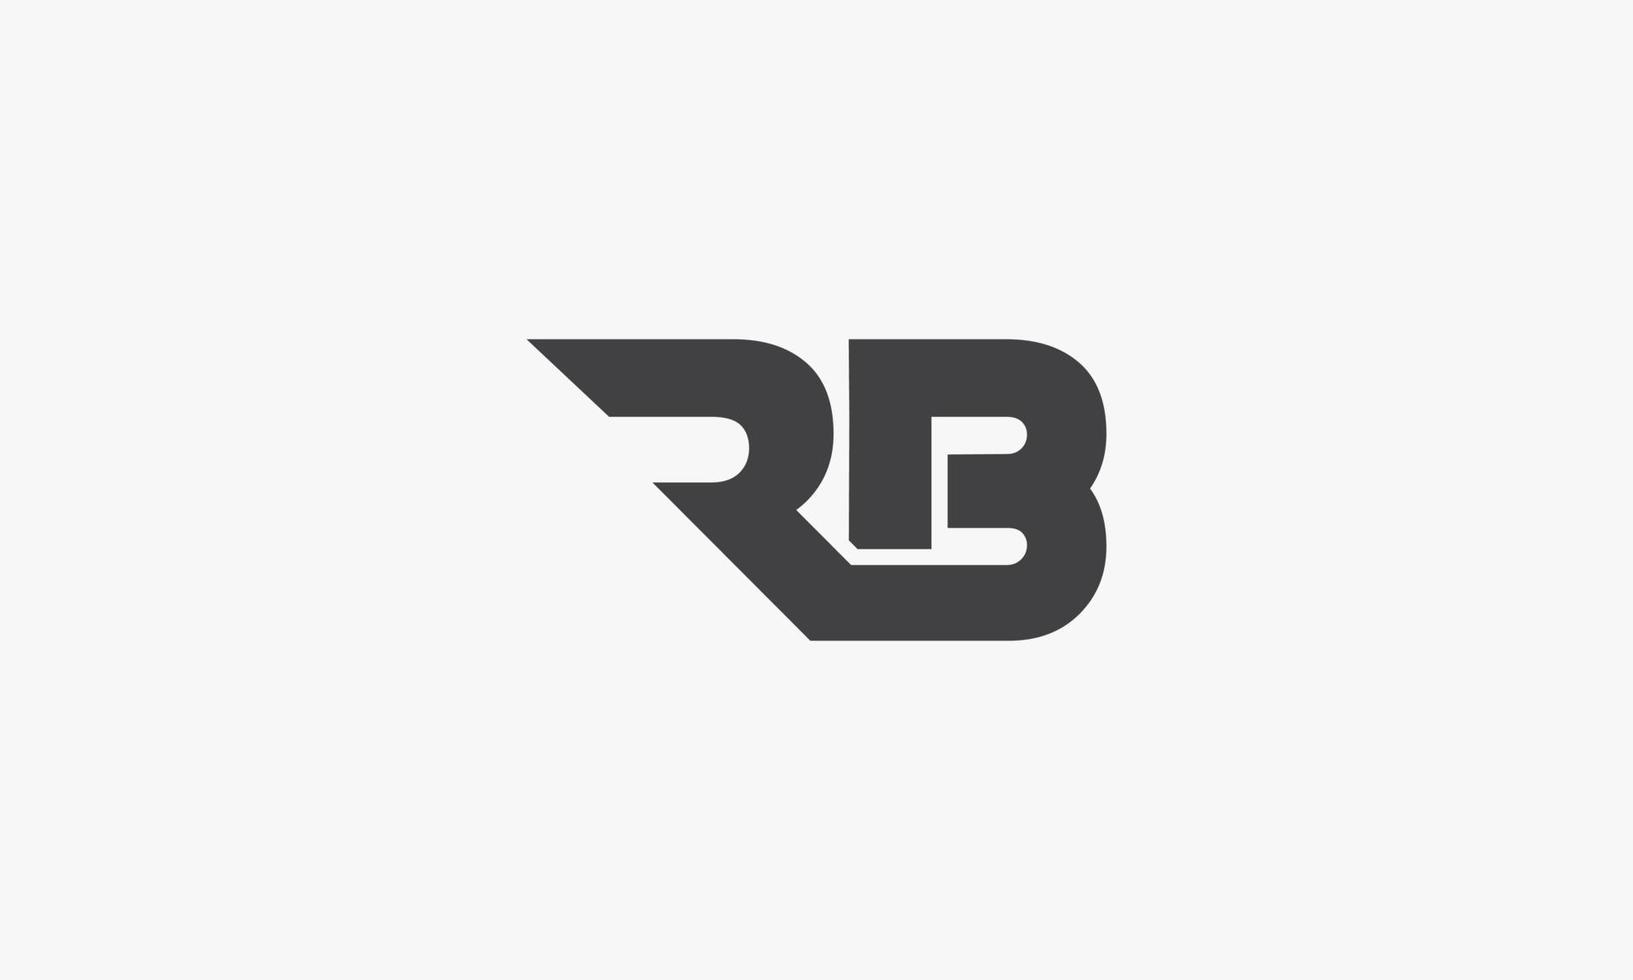 logotipo da carta rb isolado no fundo branco. vetor